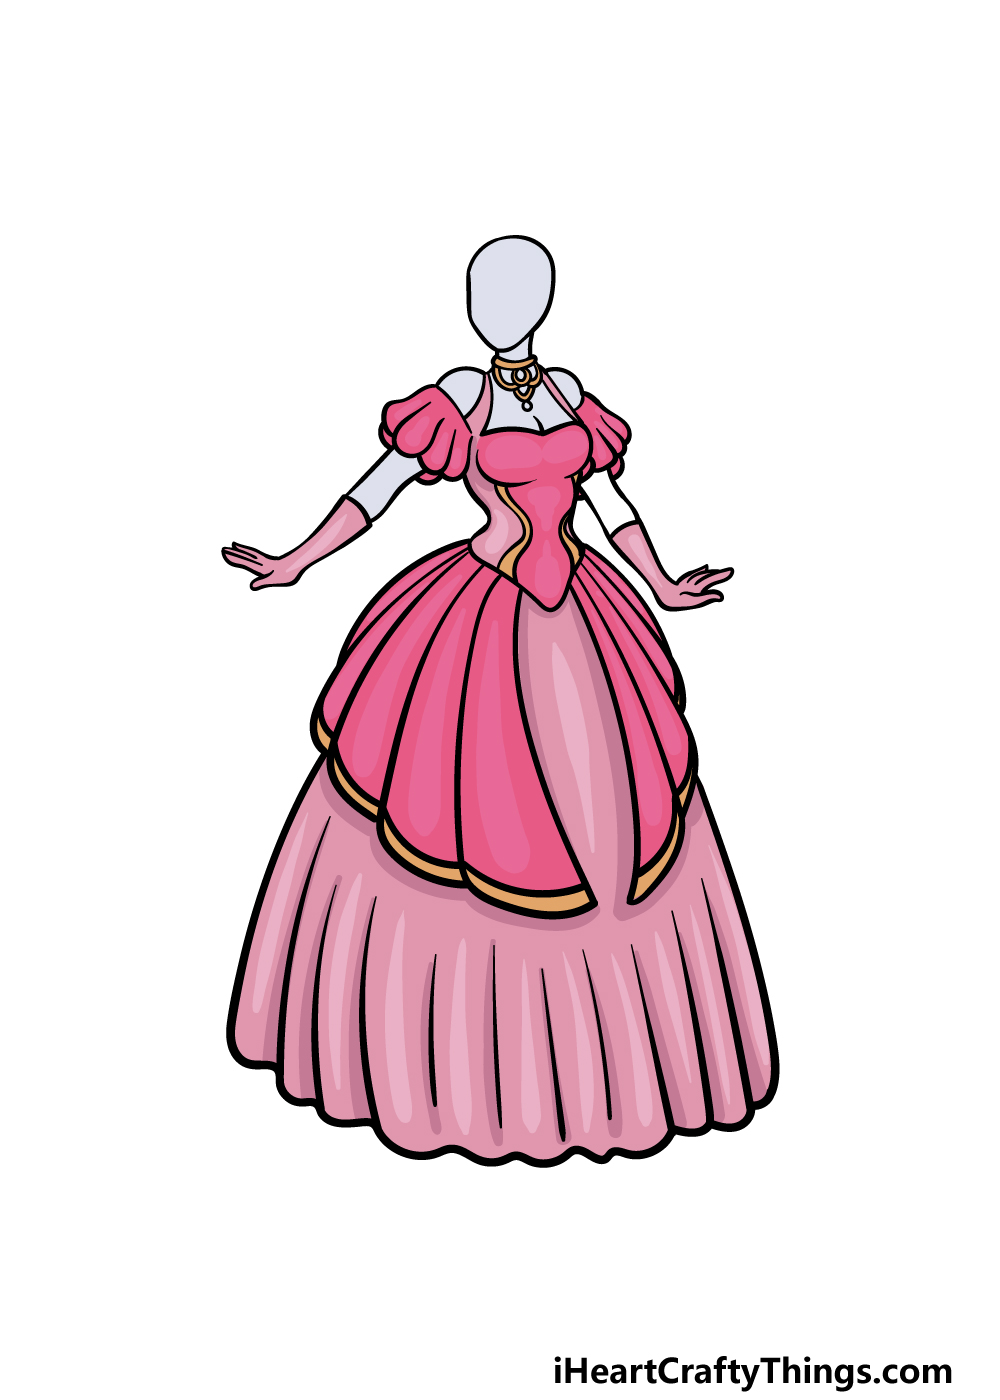 Wedding Dress Design Sketch 2 by osacora on DeviantArt